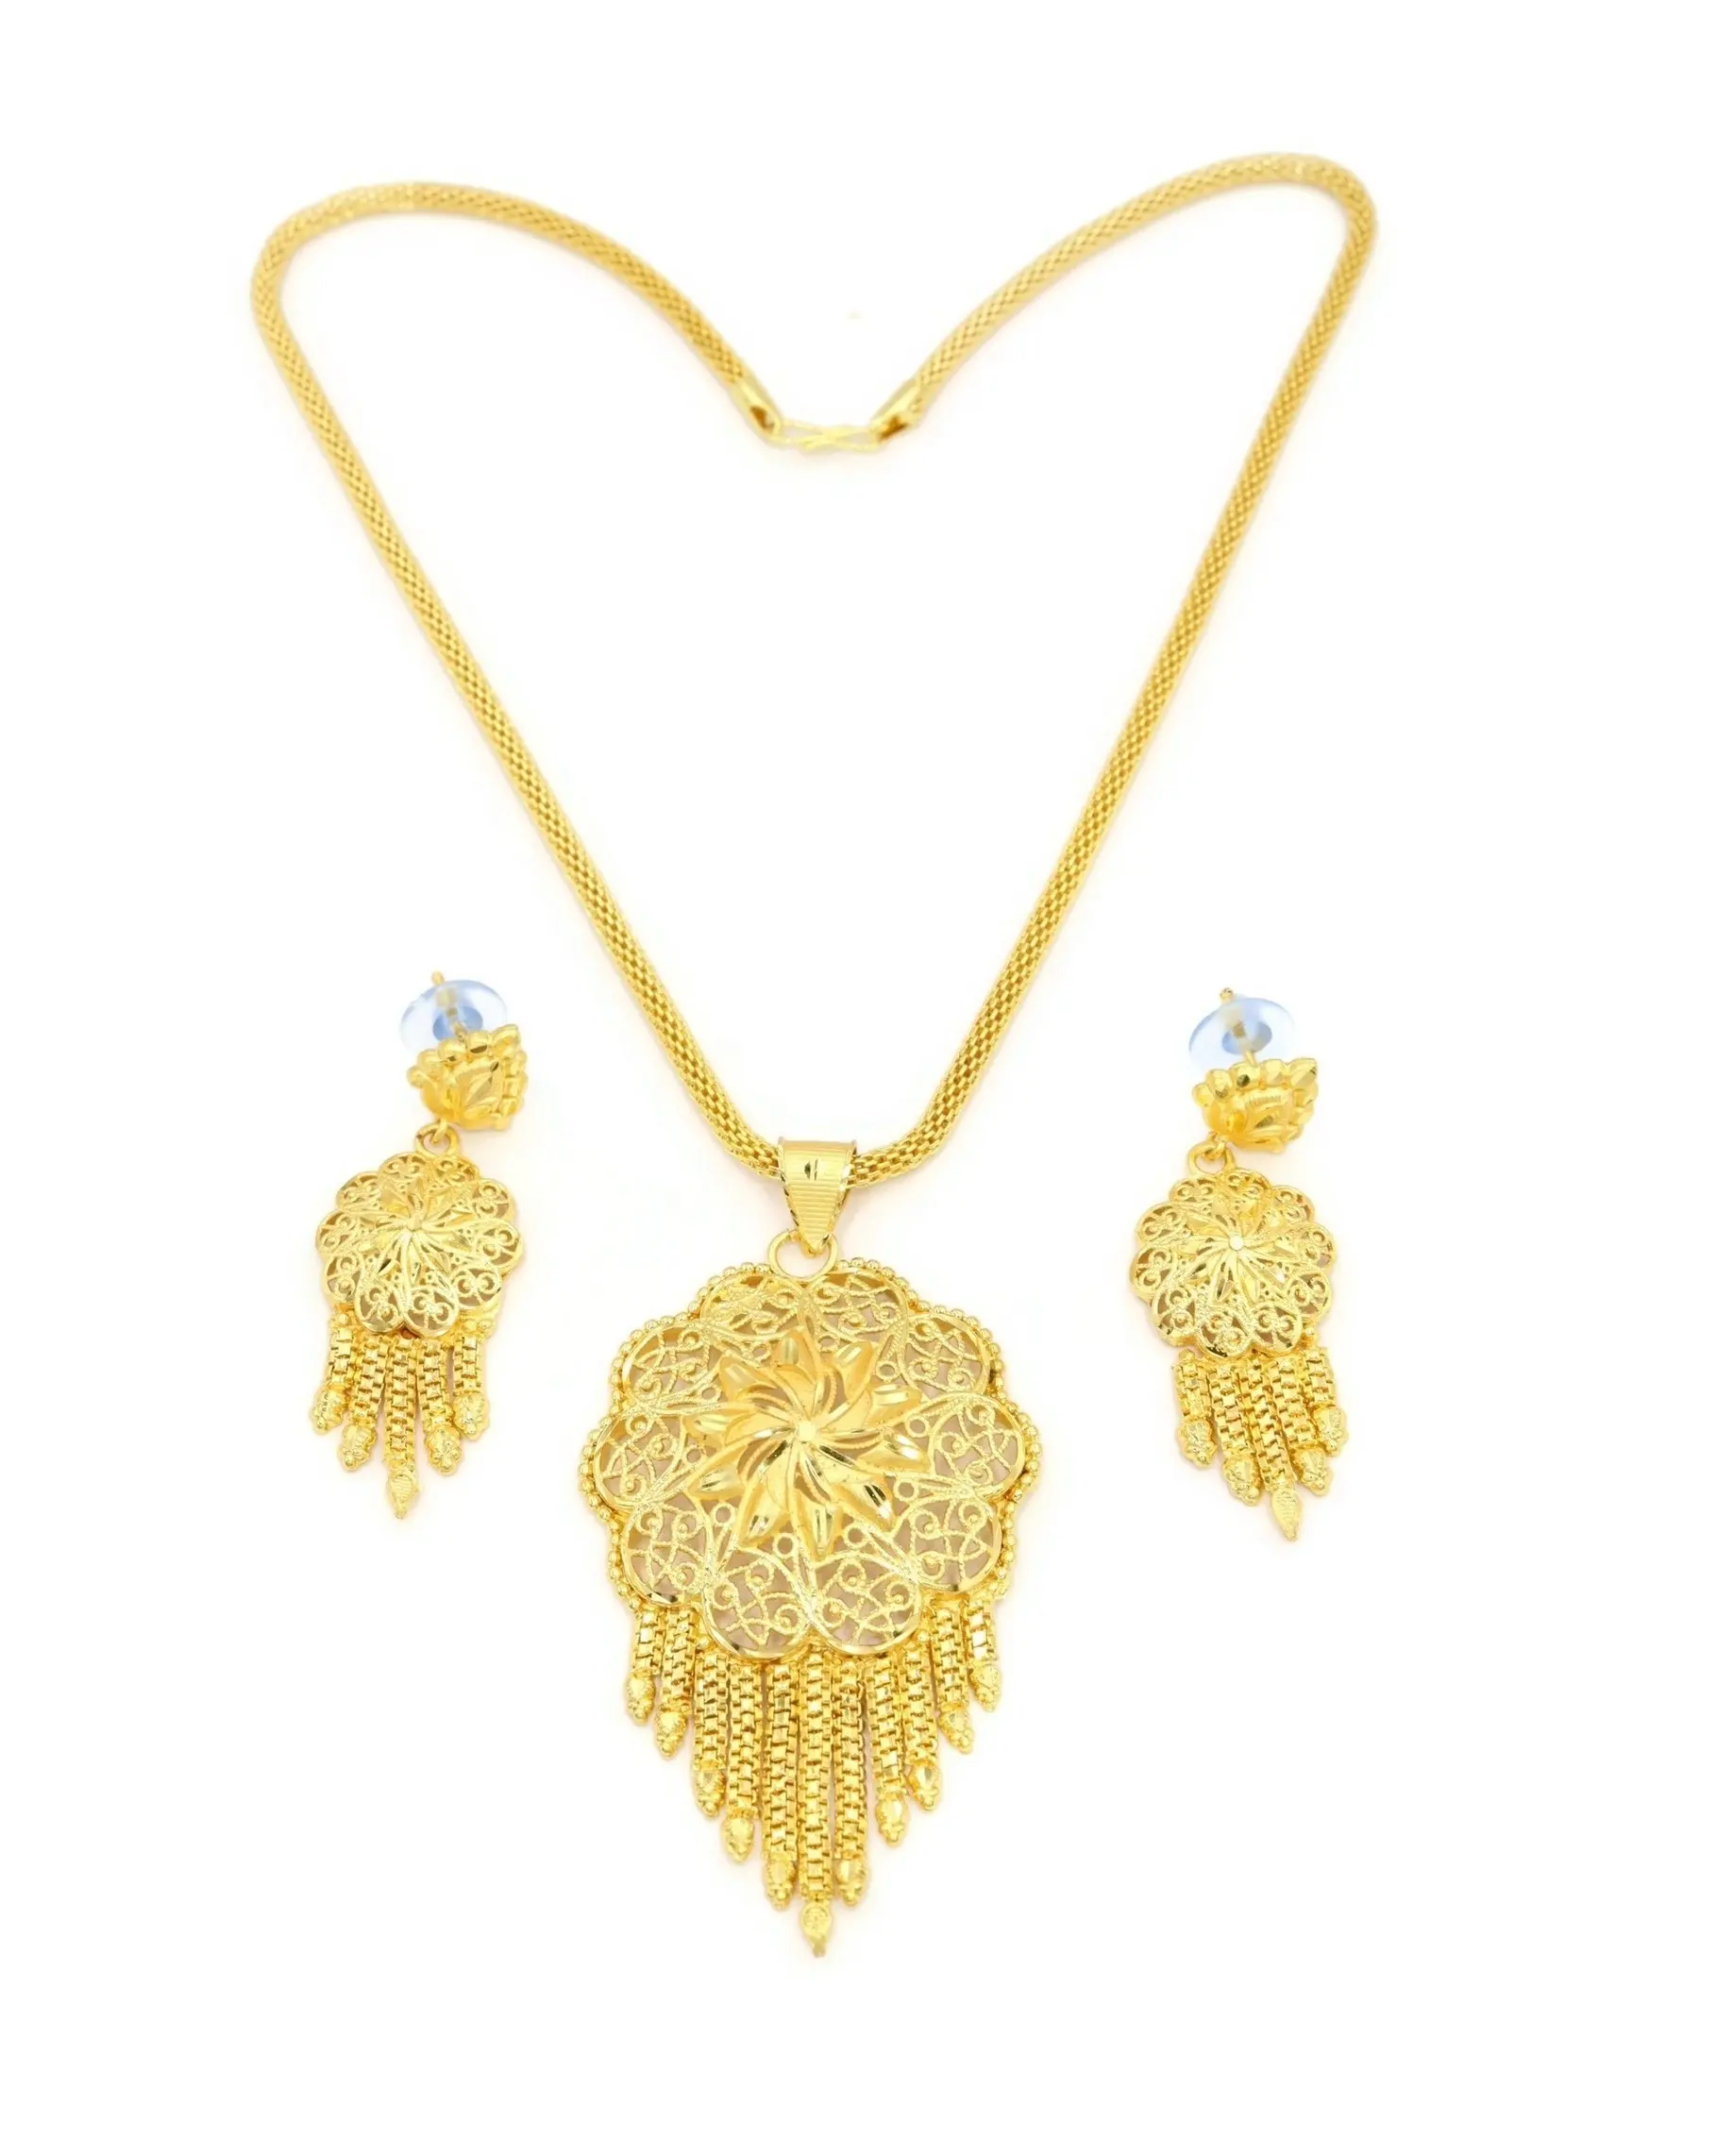 Women's Fashion Dubai Gold Plated Flower Shape Chain Necklace Pendent Earring Set Imitation Dubai Jewelry Fashion